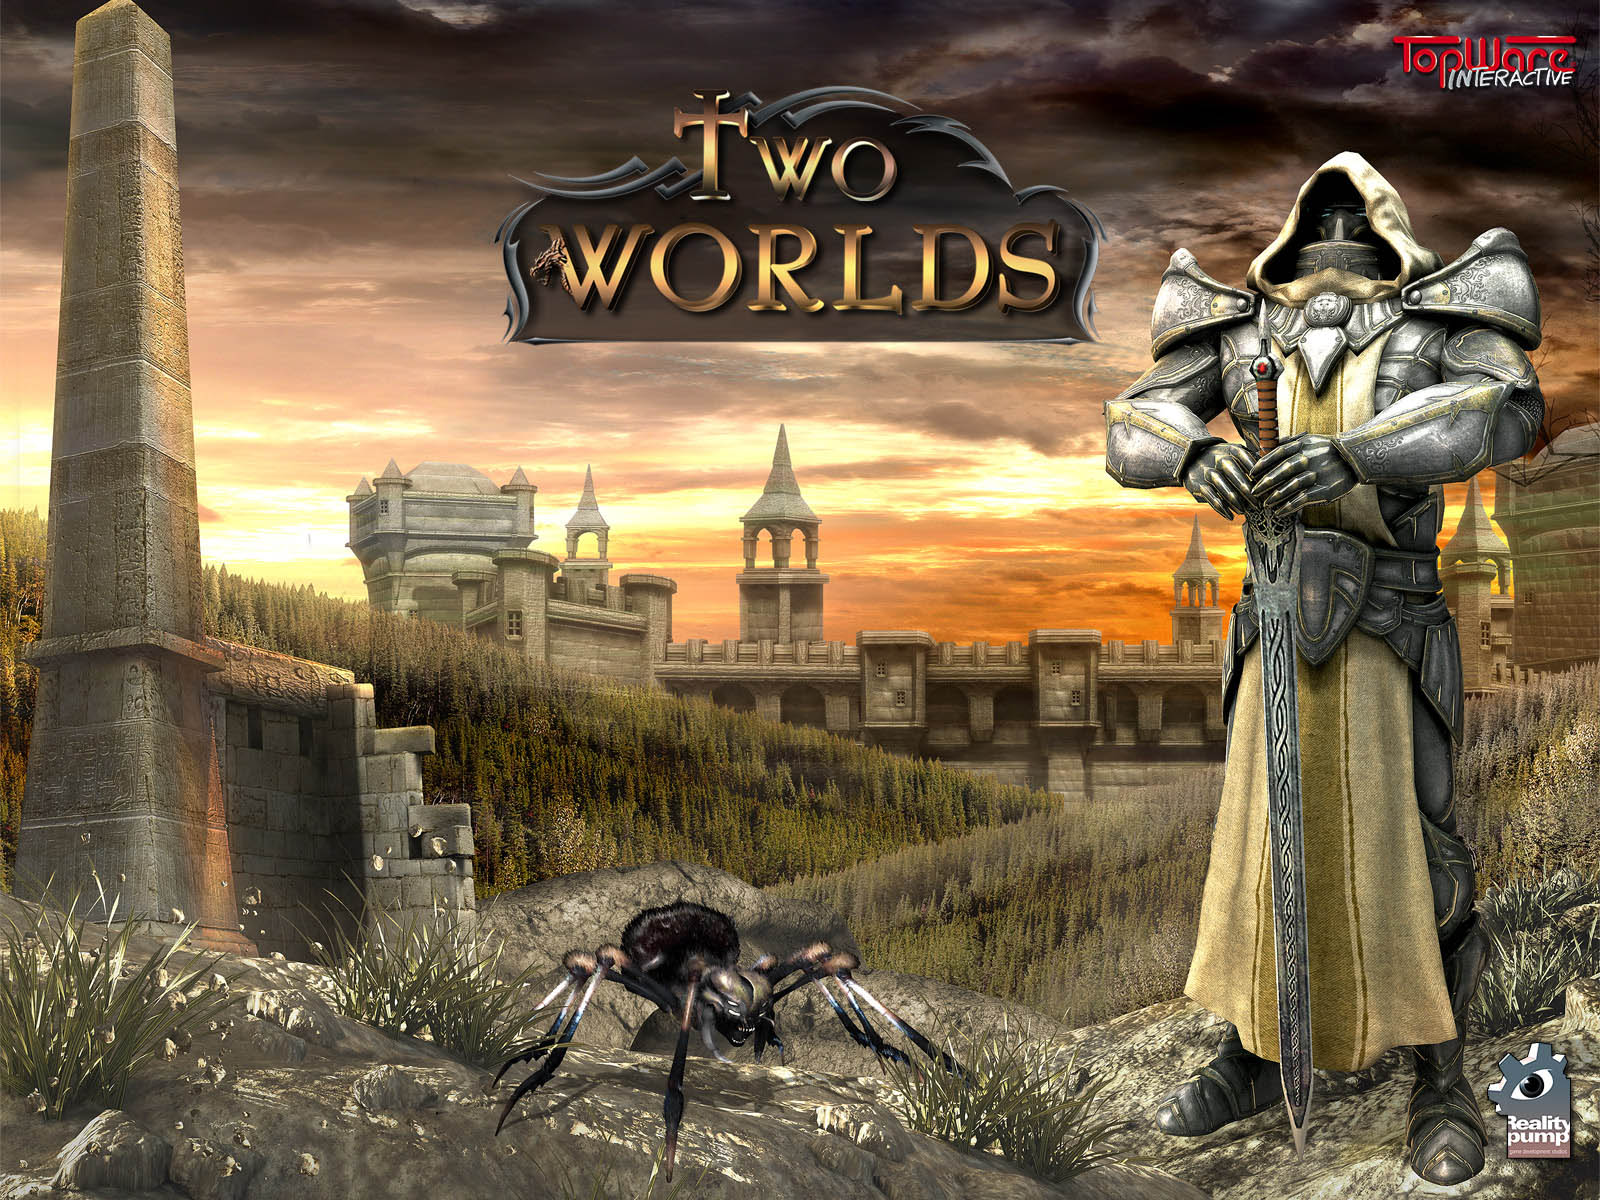 Bakgrundsbilder Two Worlds Datorspel spel dataspel